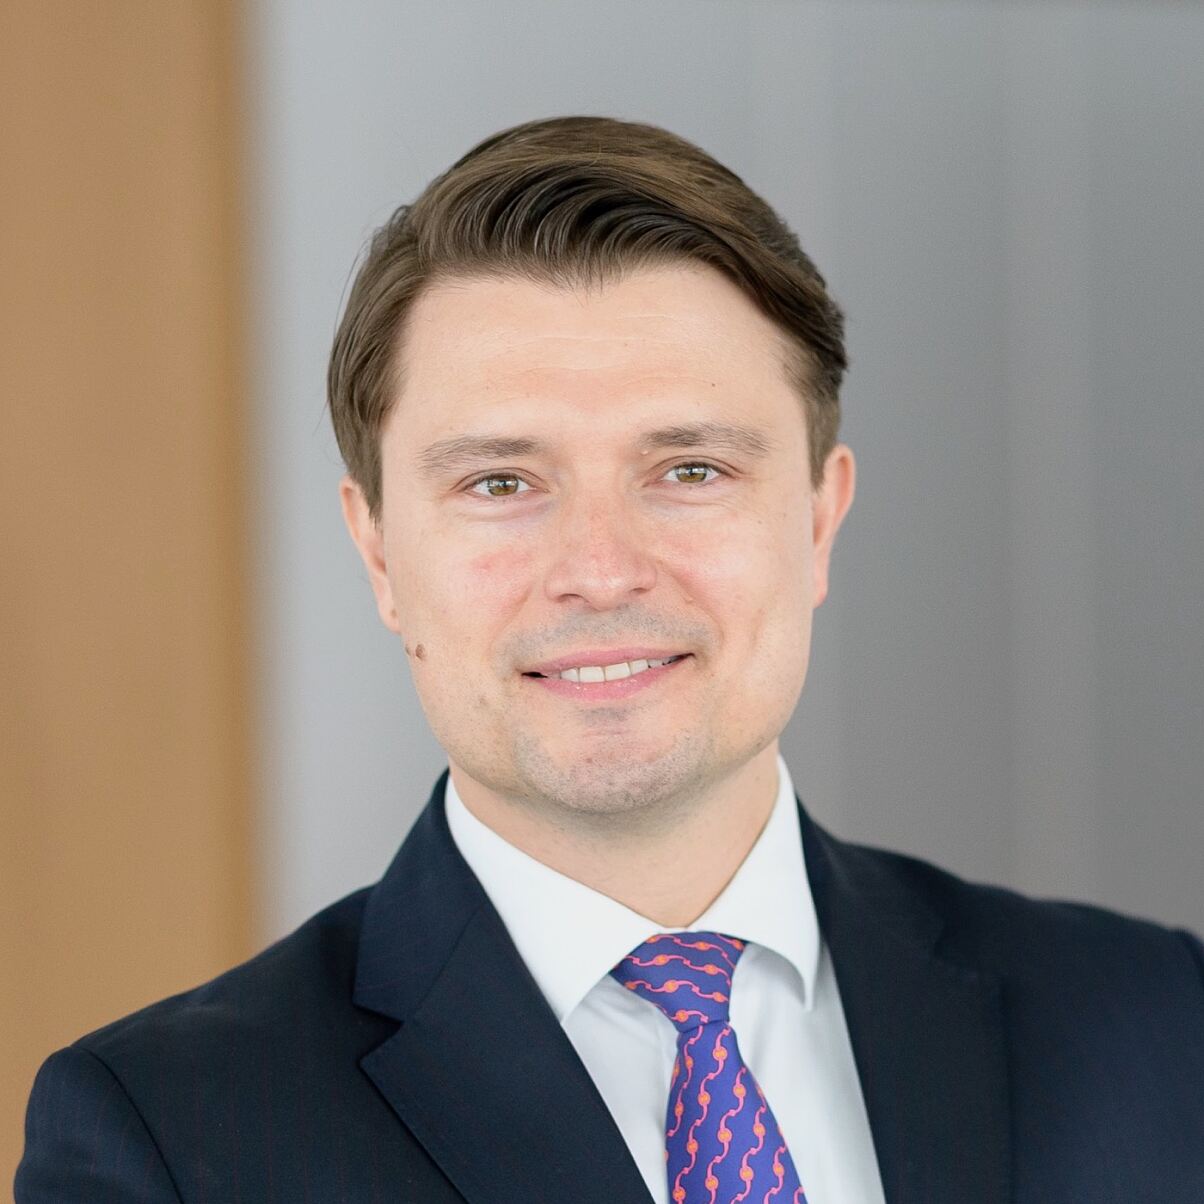 Ivo Ivanovski - CEO EuroTeleSites